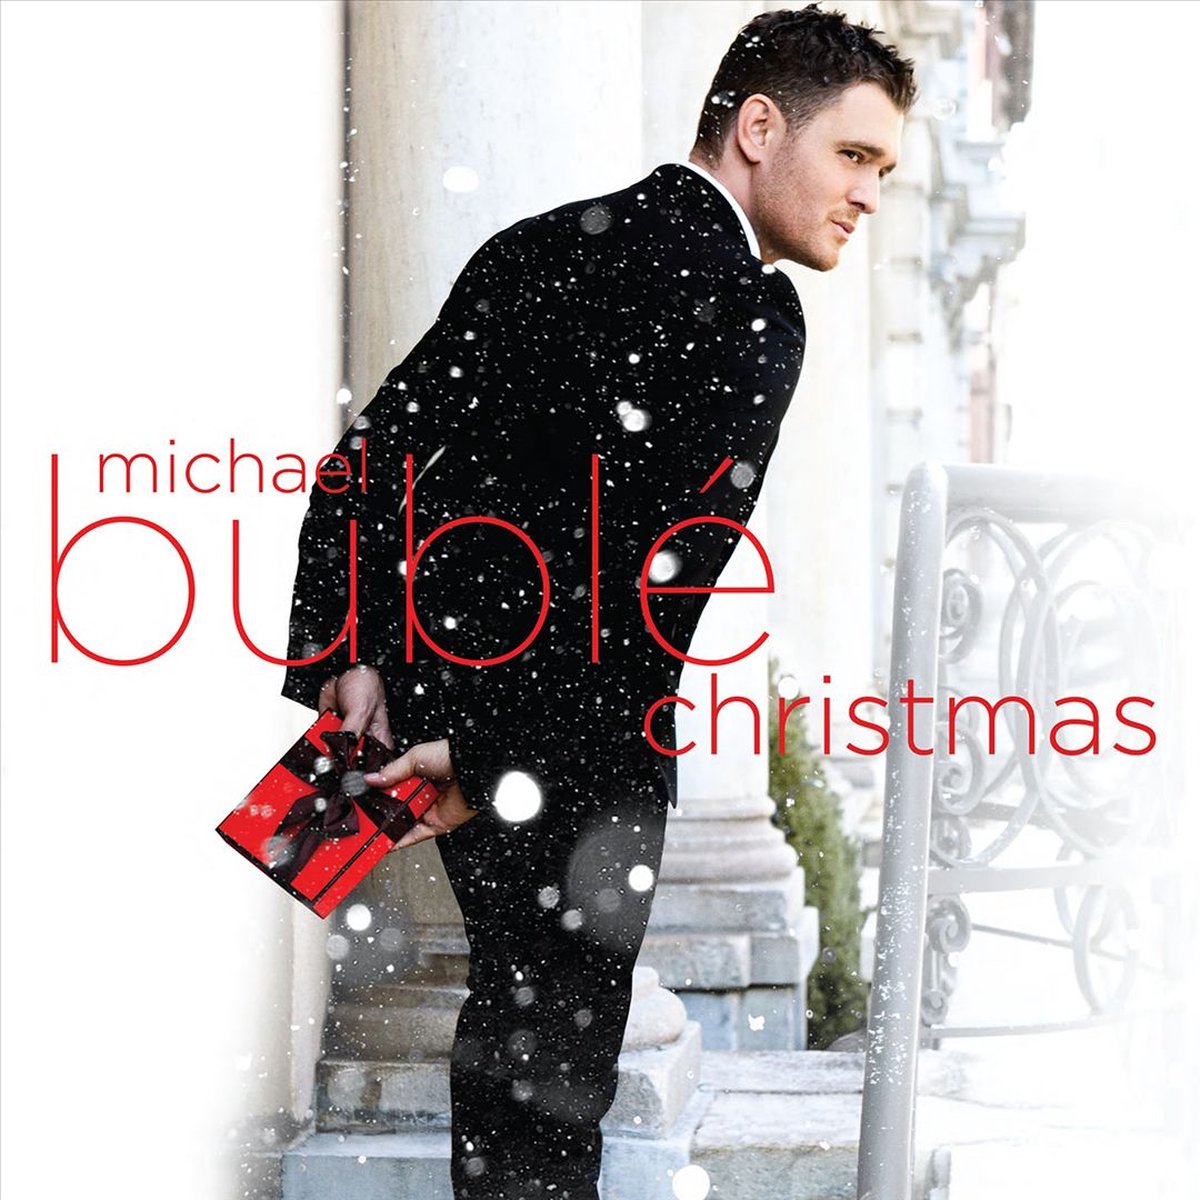 Christmas (LP) - Buble,michael